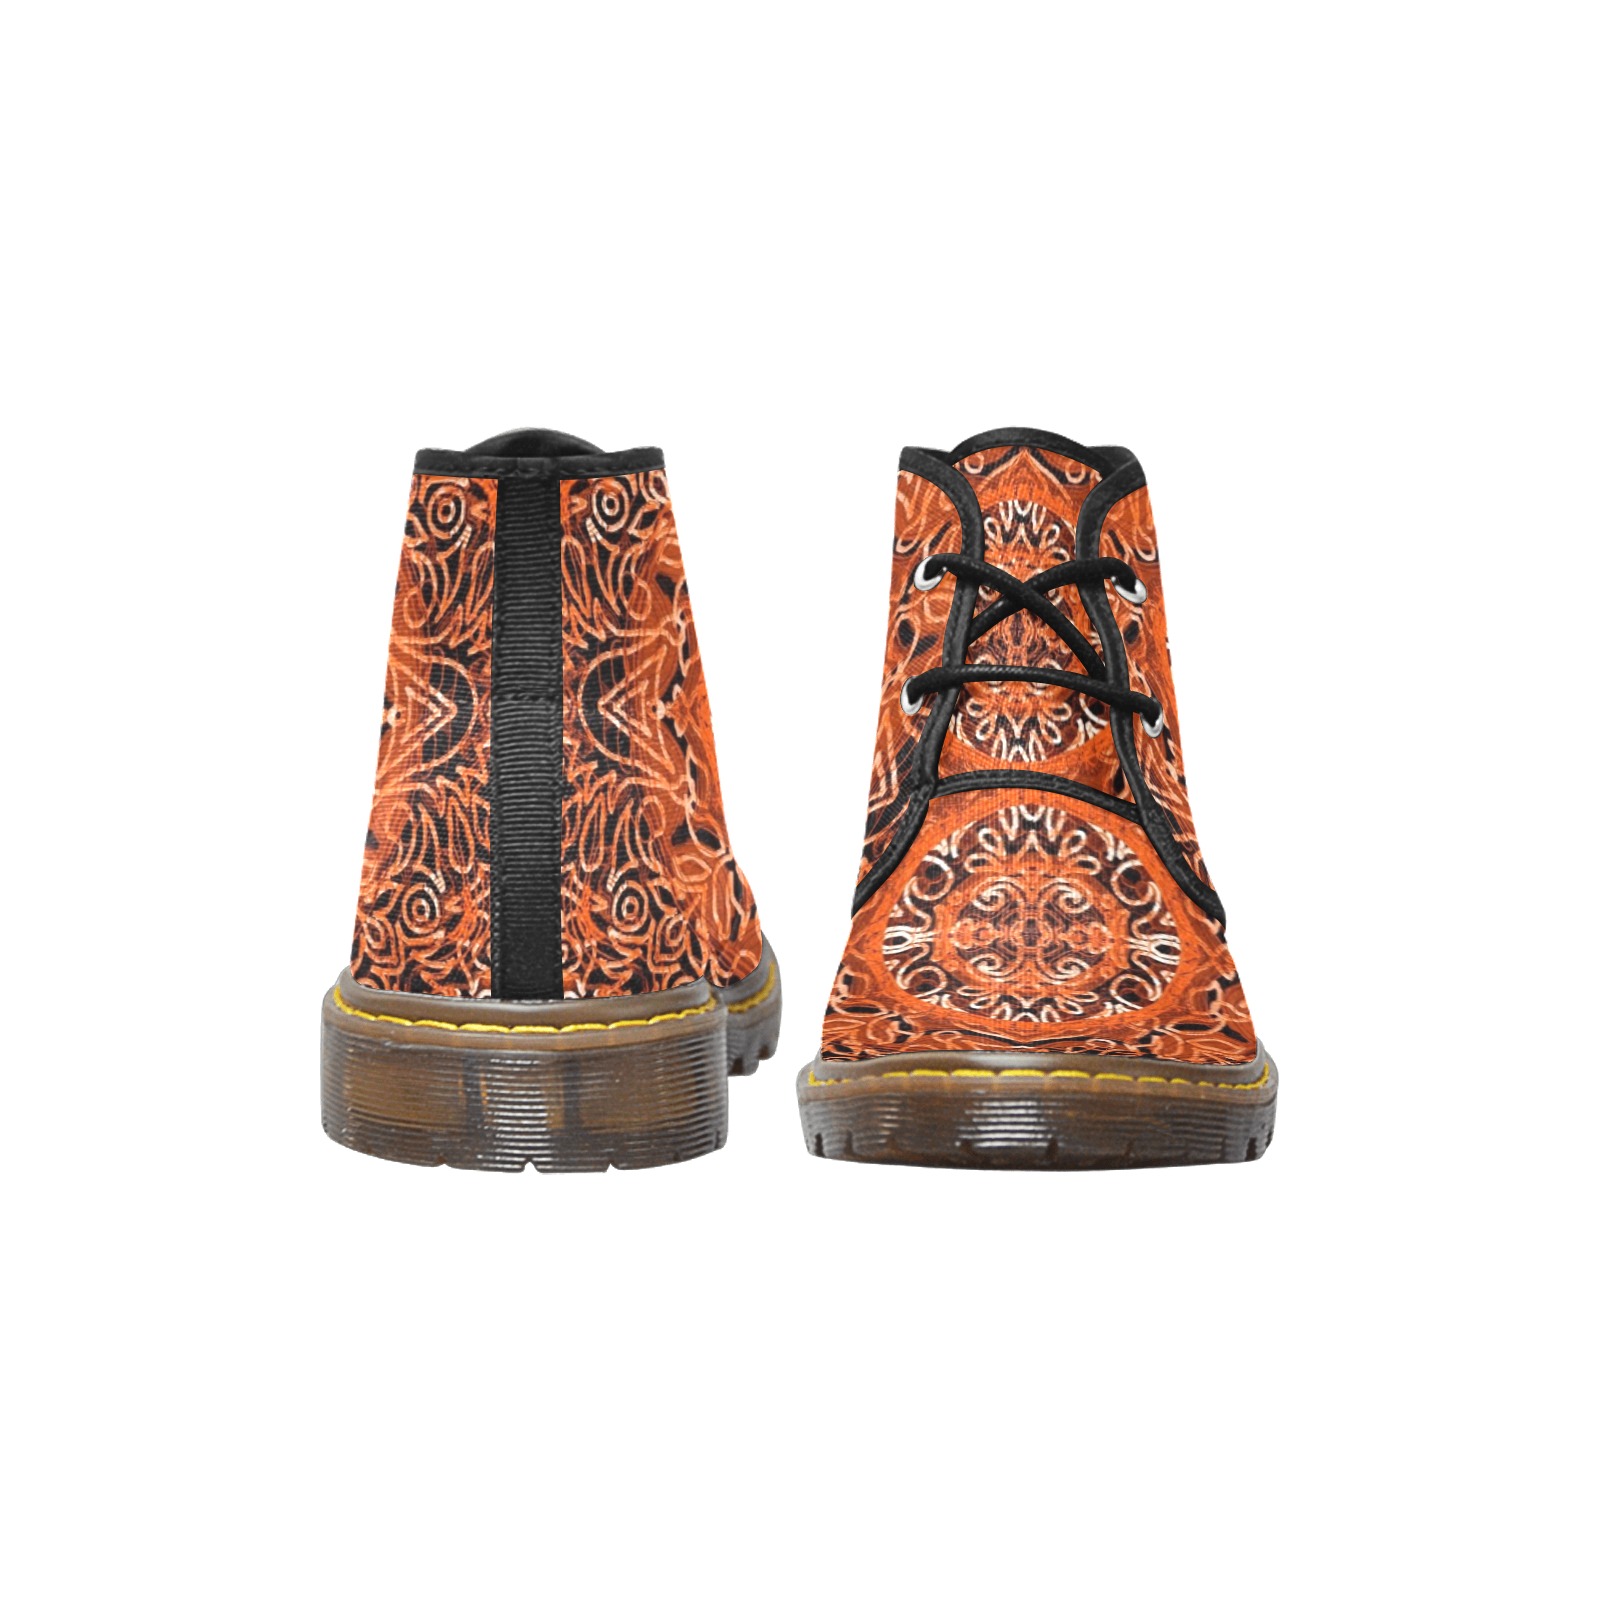 labytinthe 10 Women's Canvas Chukka Boots (Model 2402-1)